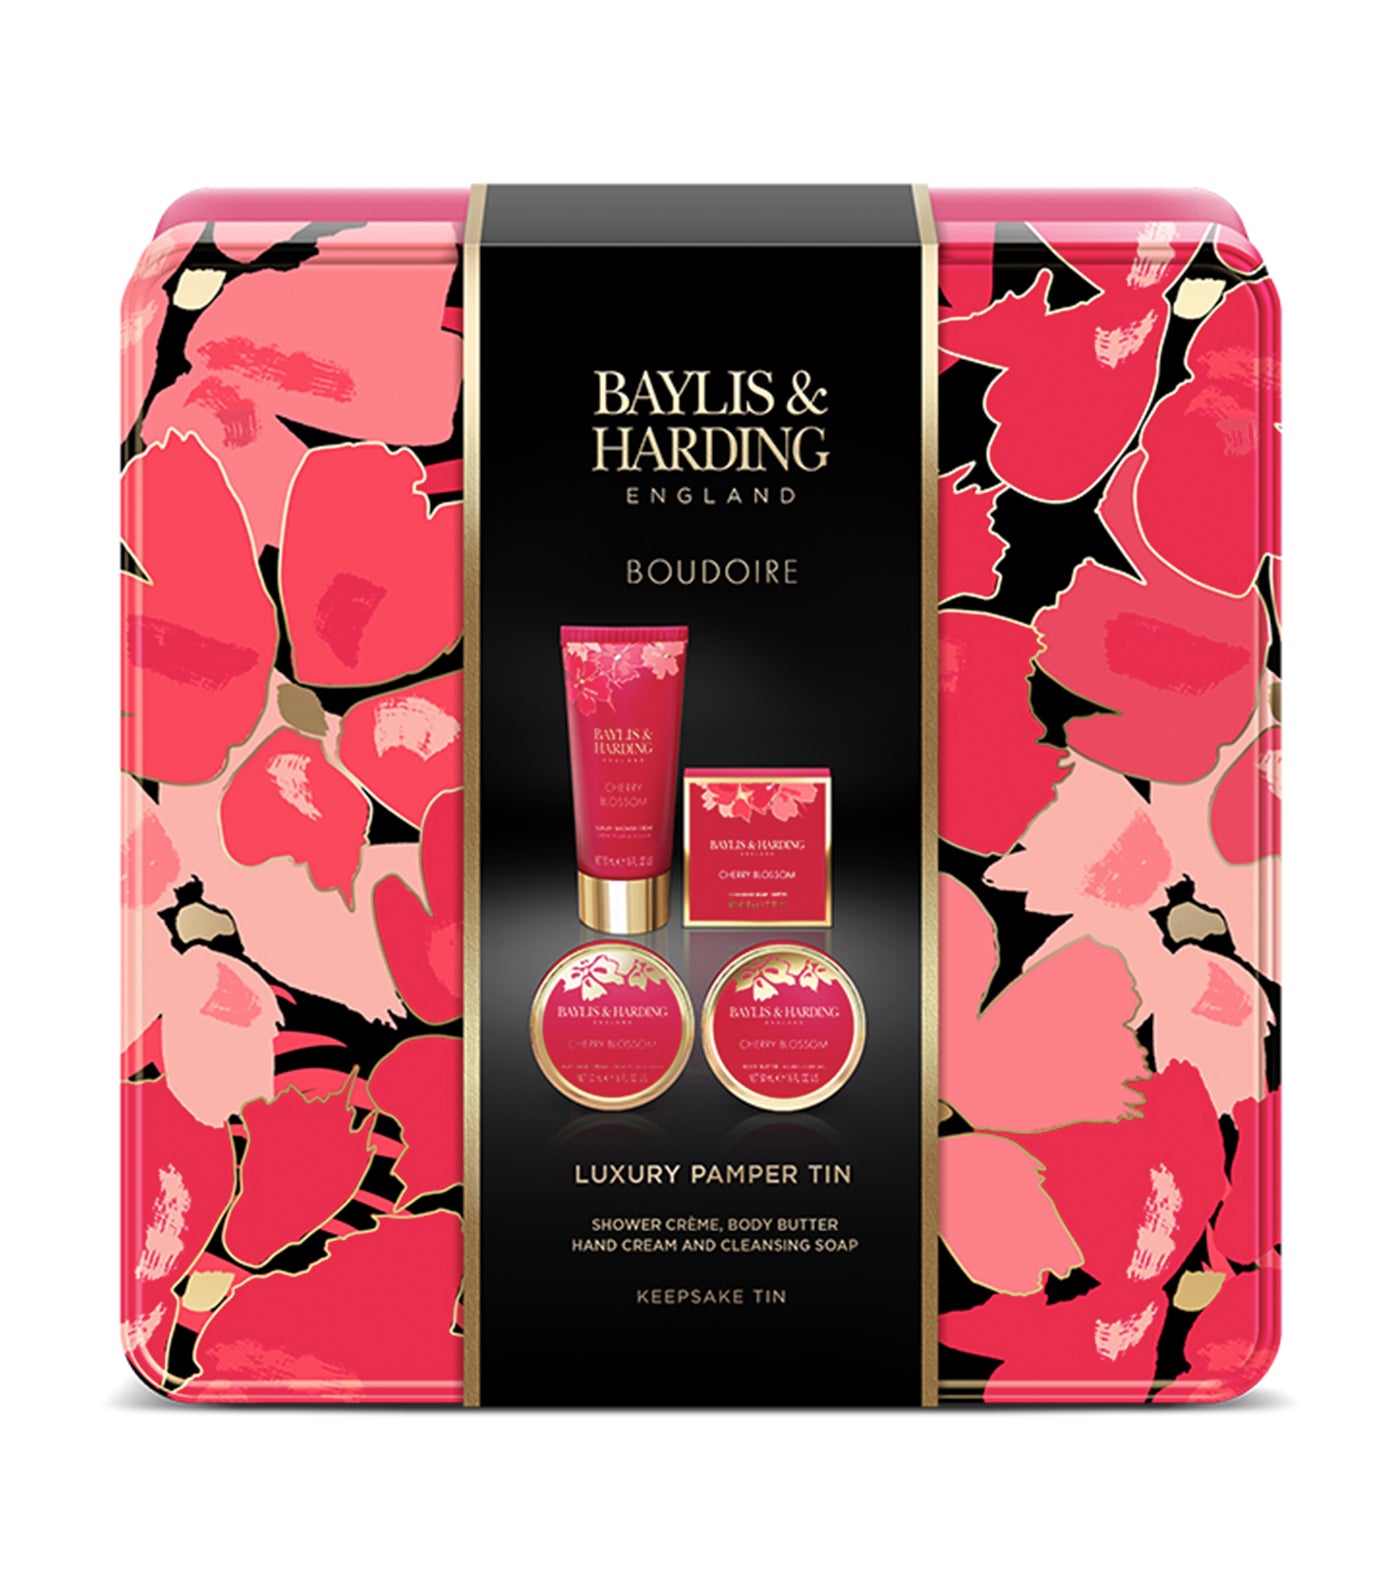 Boudiore Cherry Blossom Luxury Pamper Tin Gift Set